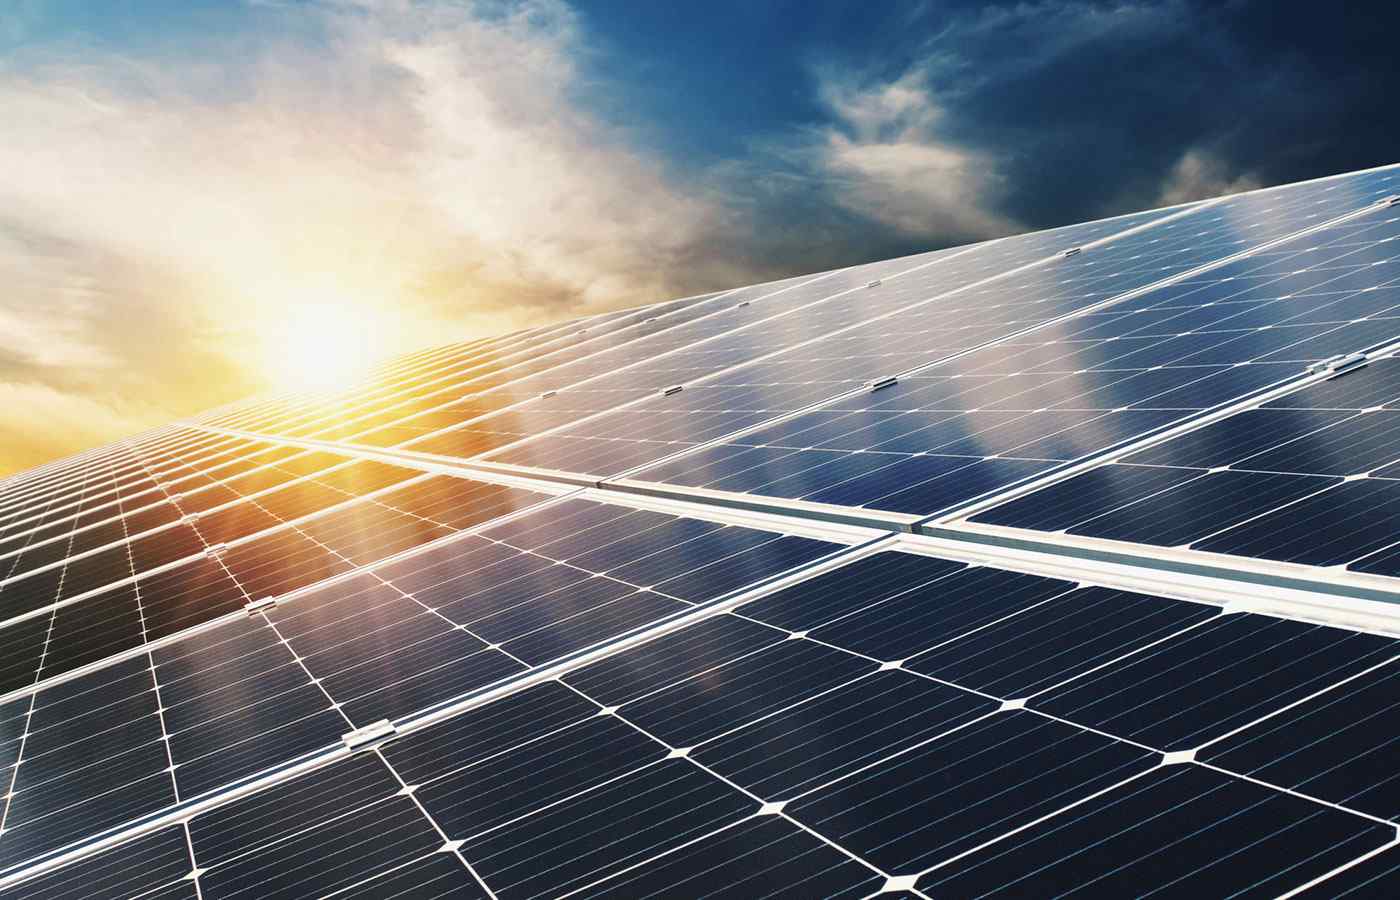 Why did solar energy stocks crash this week?